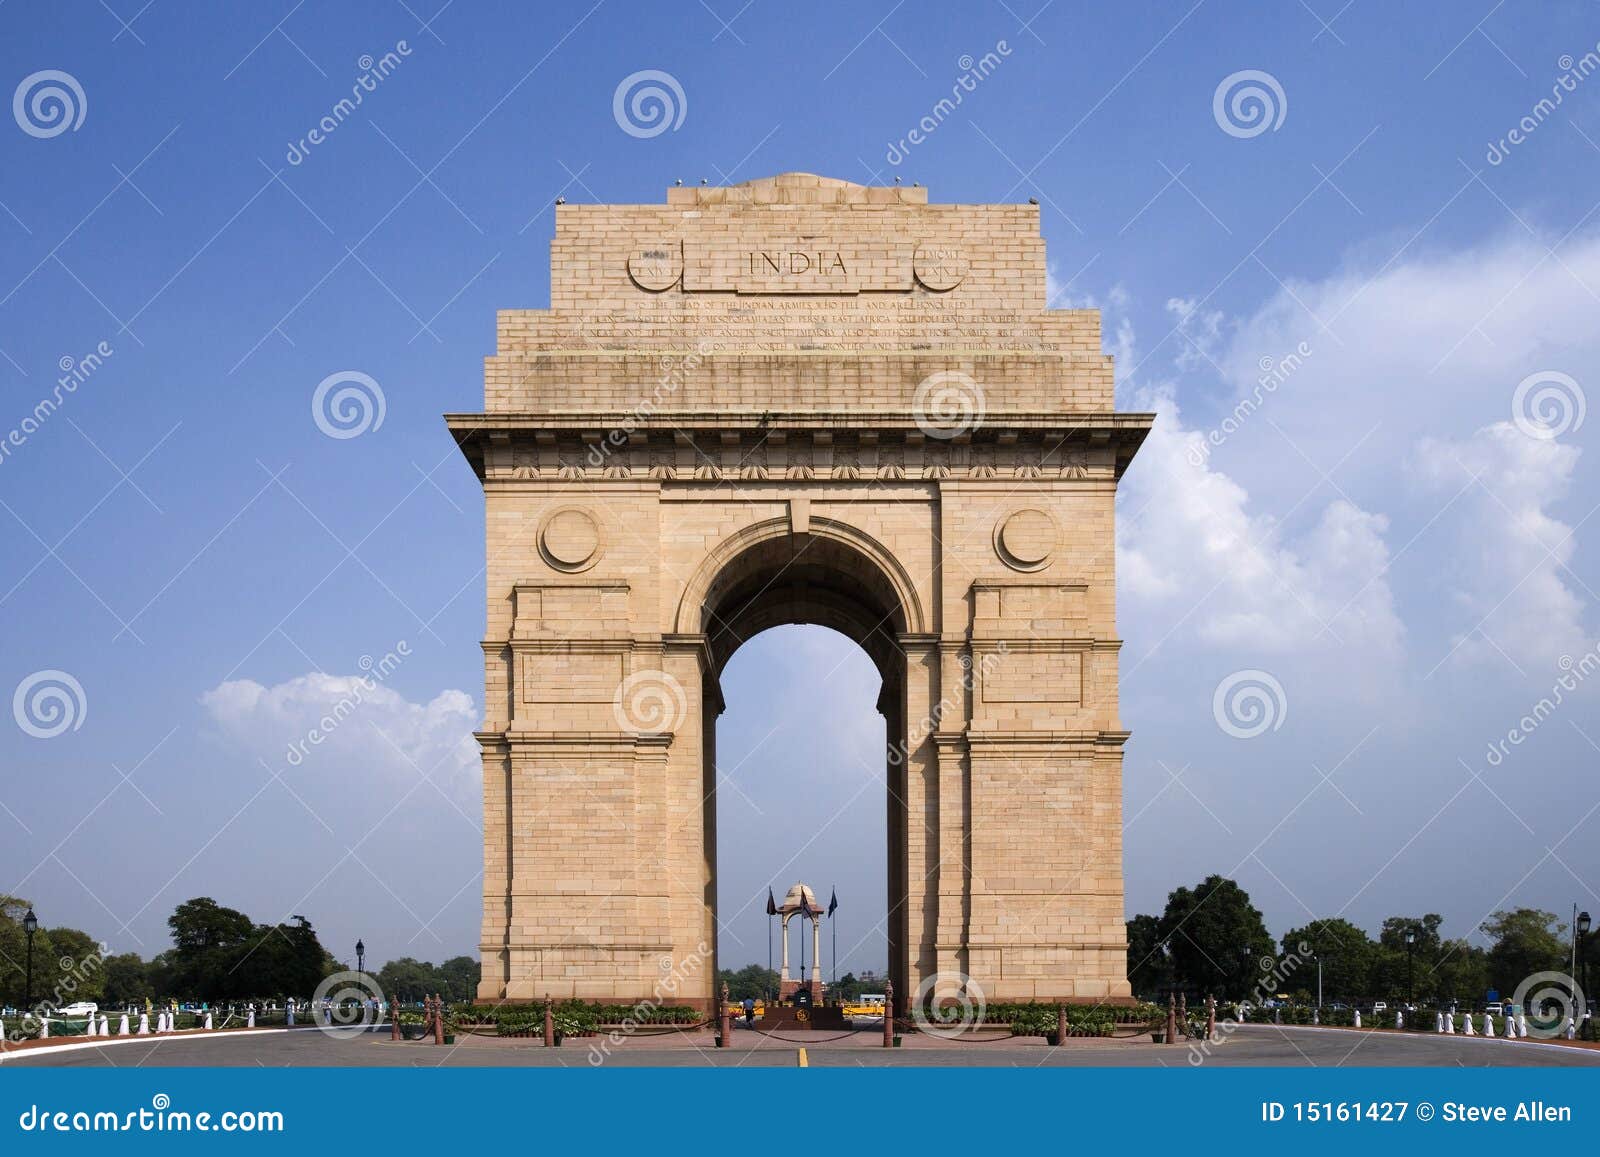 india gate - delhi in india